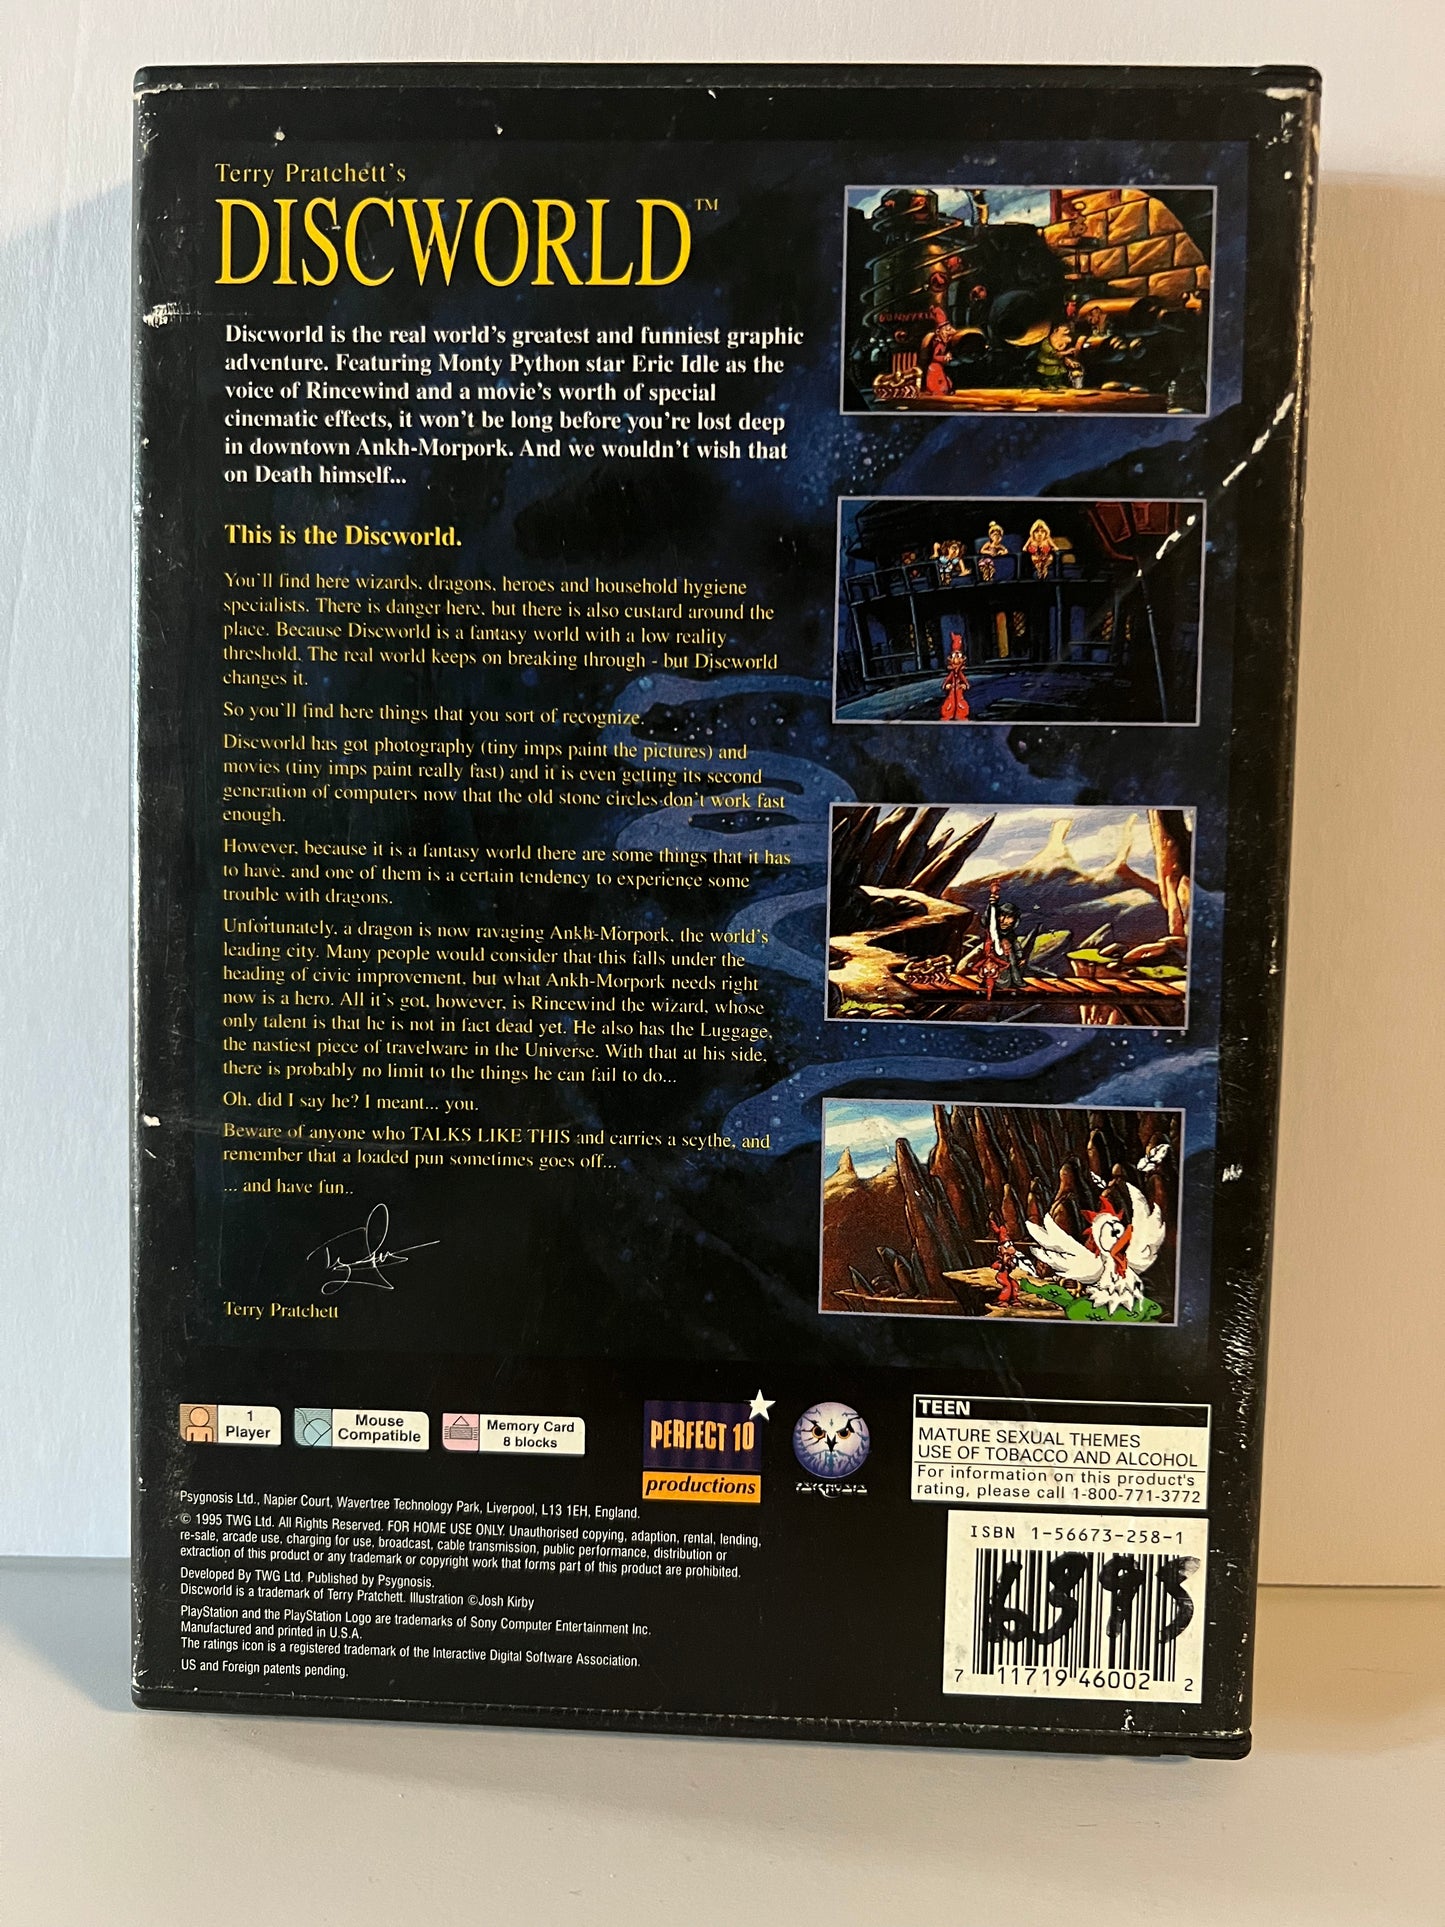 Terry Pratchett's Discworld - PS1 Game - Used